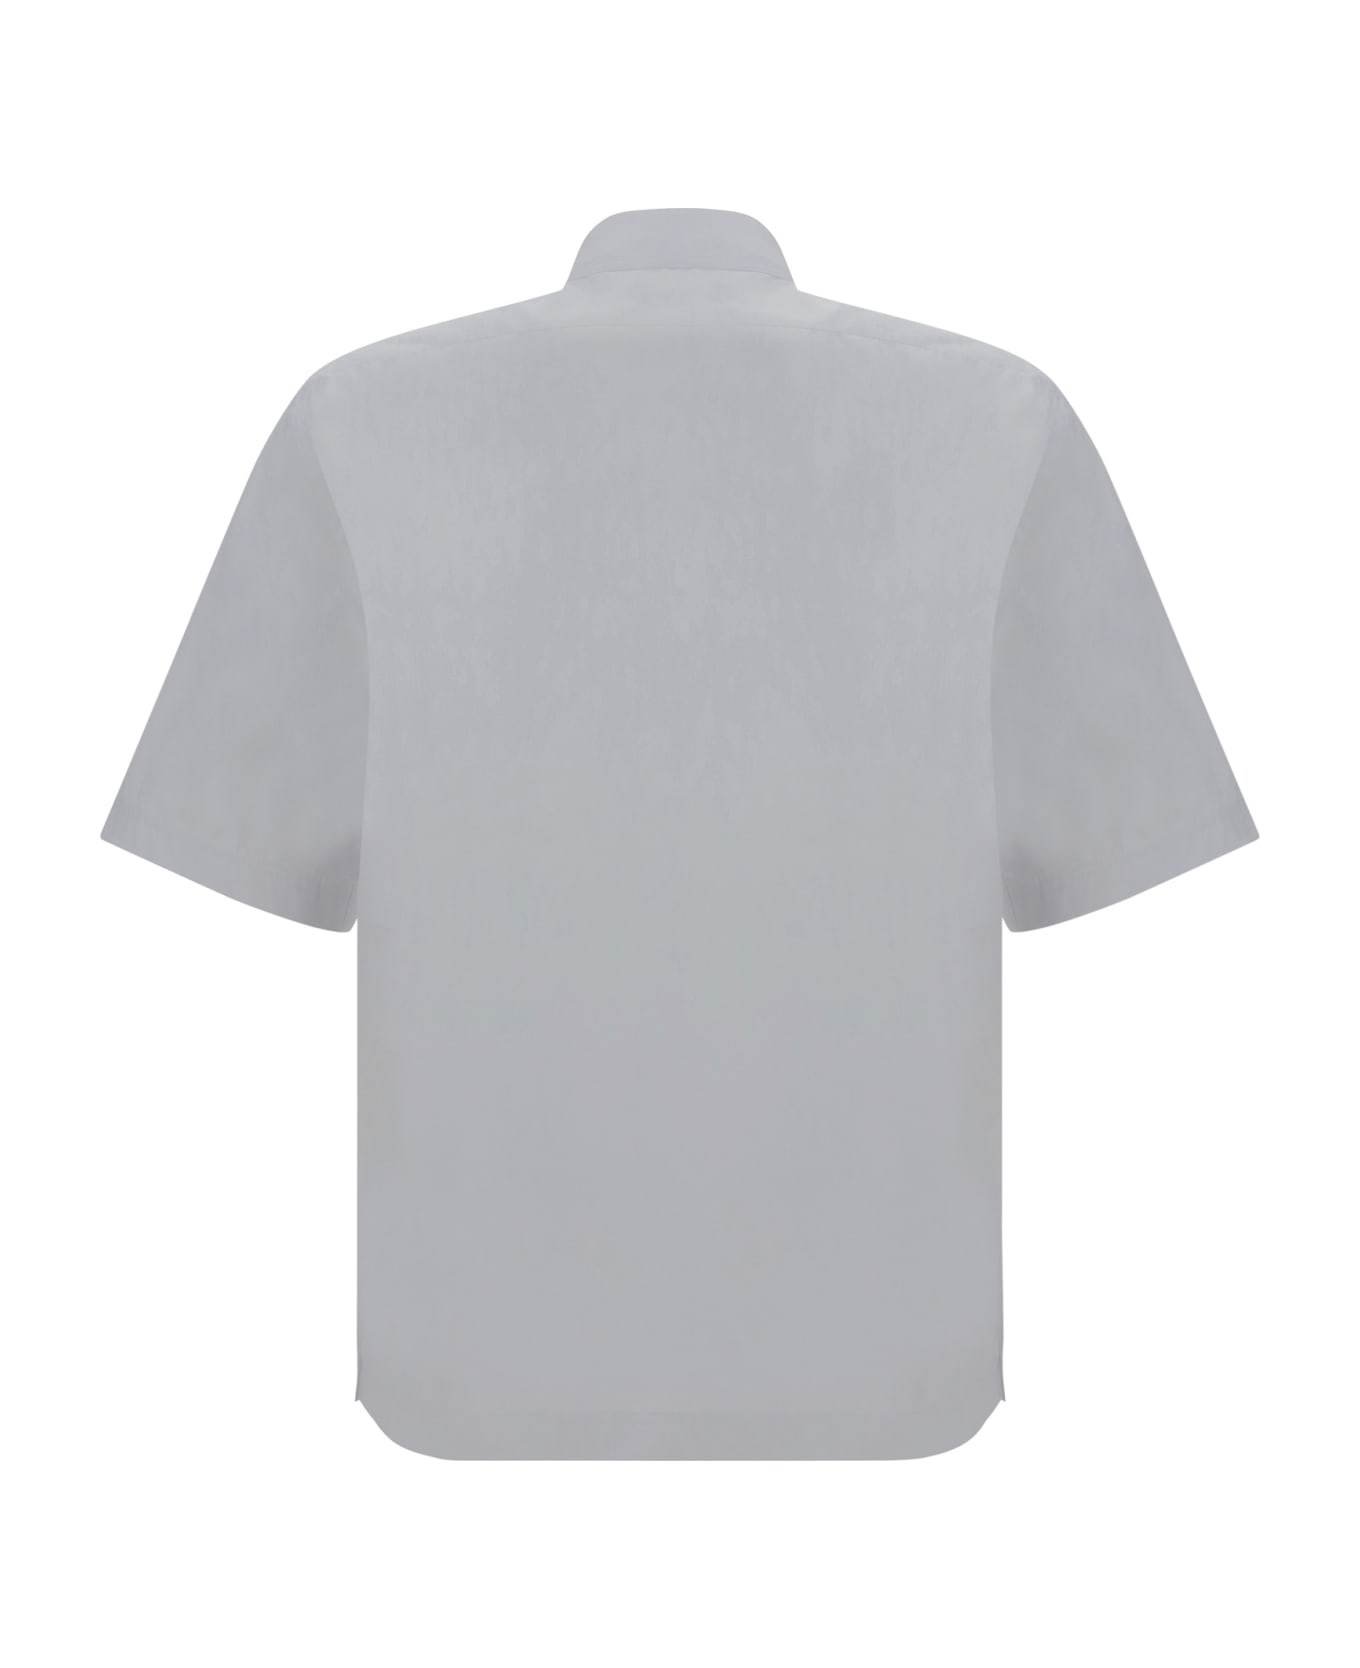 Lardini Shirt